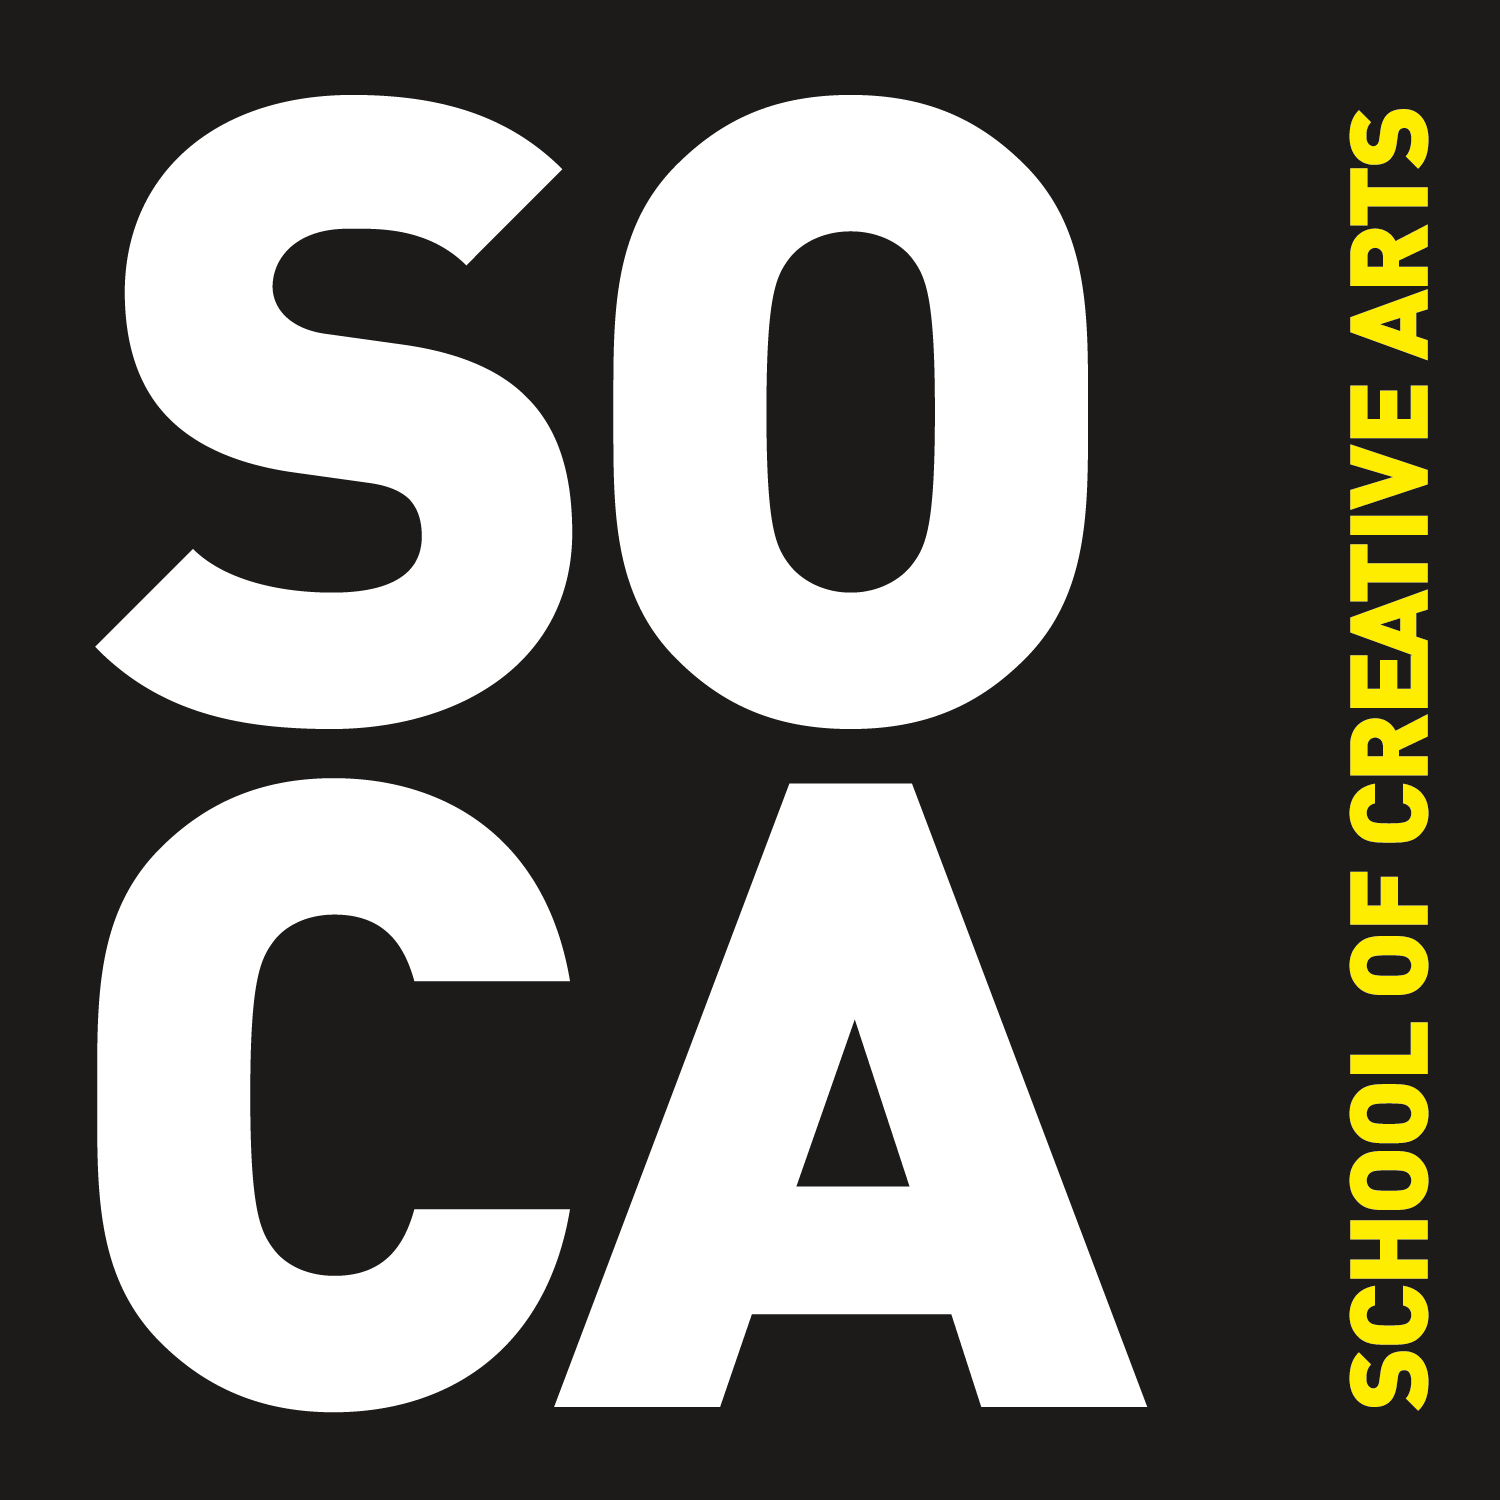 School of Creative Arts logo